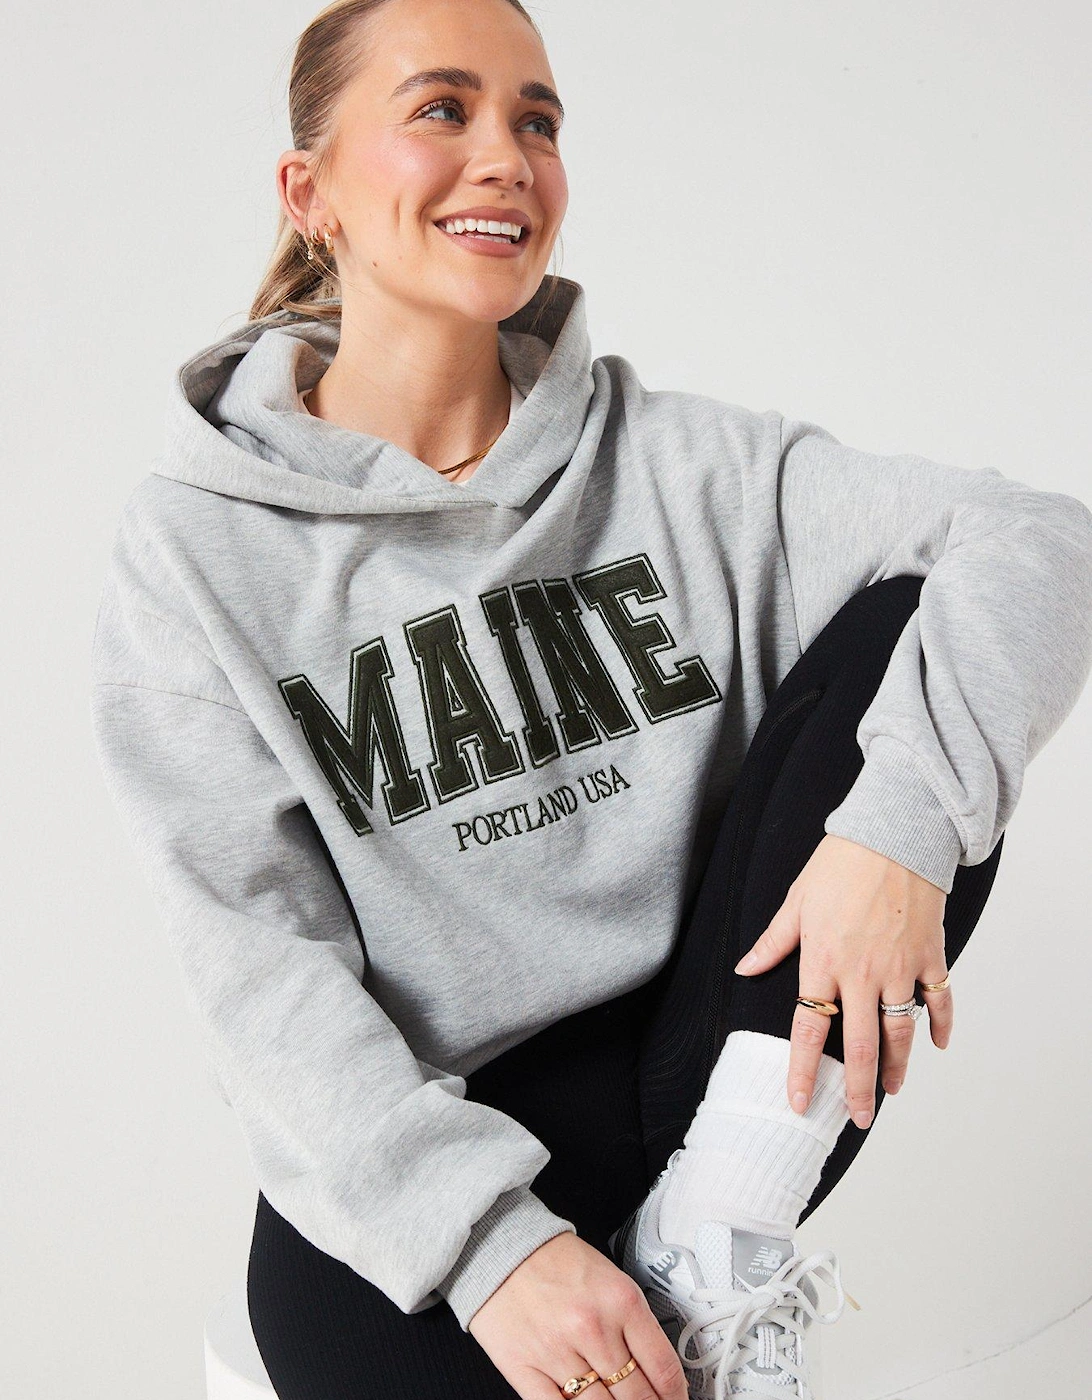 X Hattie Bourn Maine Logo Oversized Hoodie - Grey